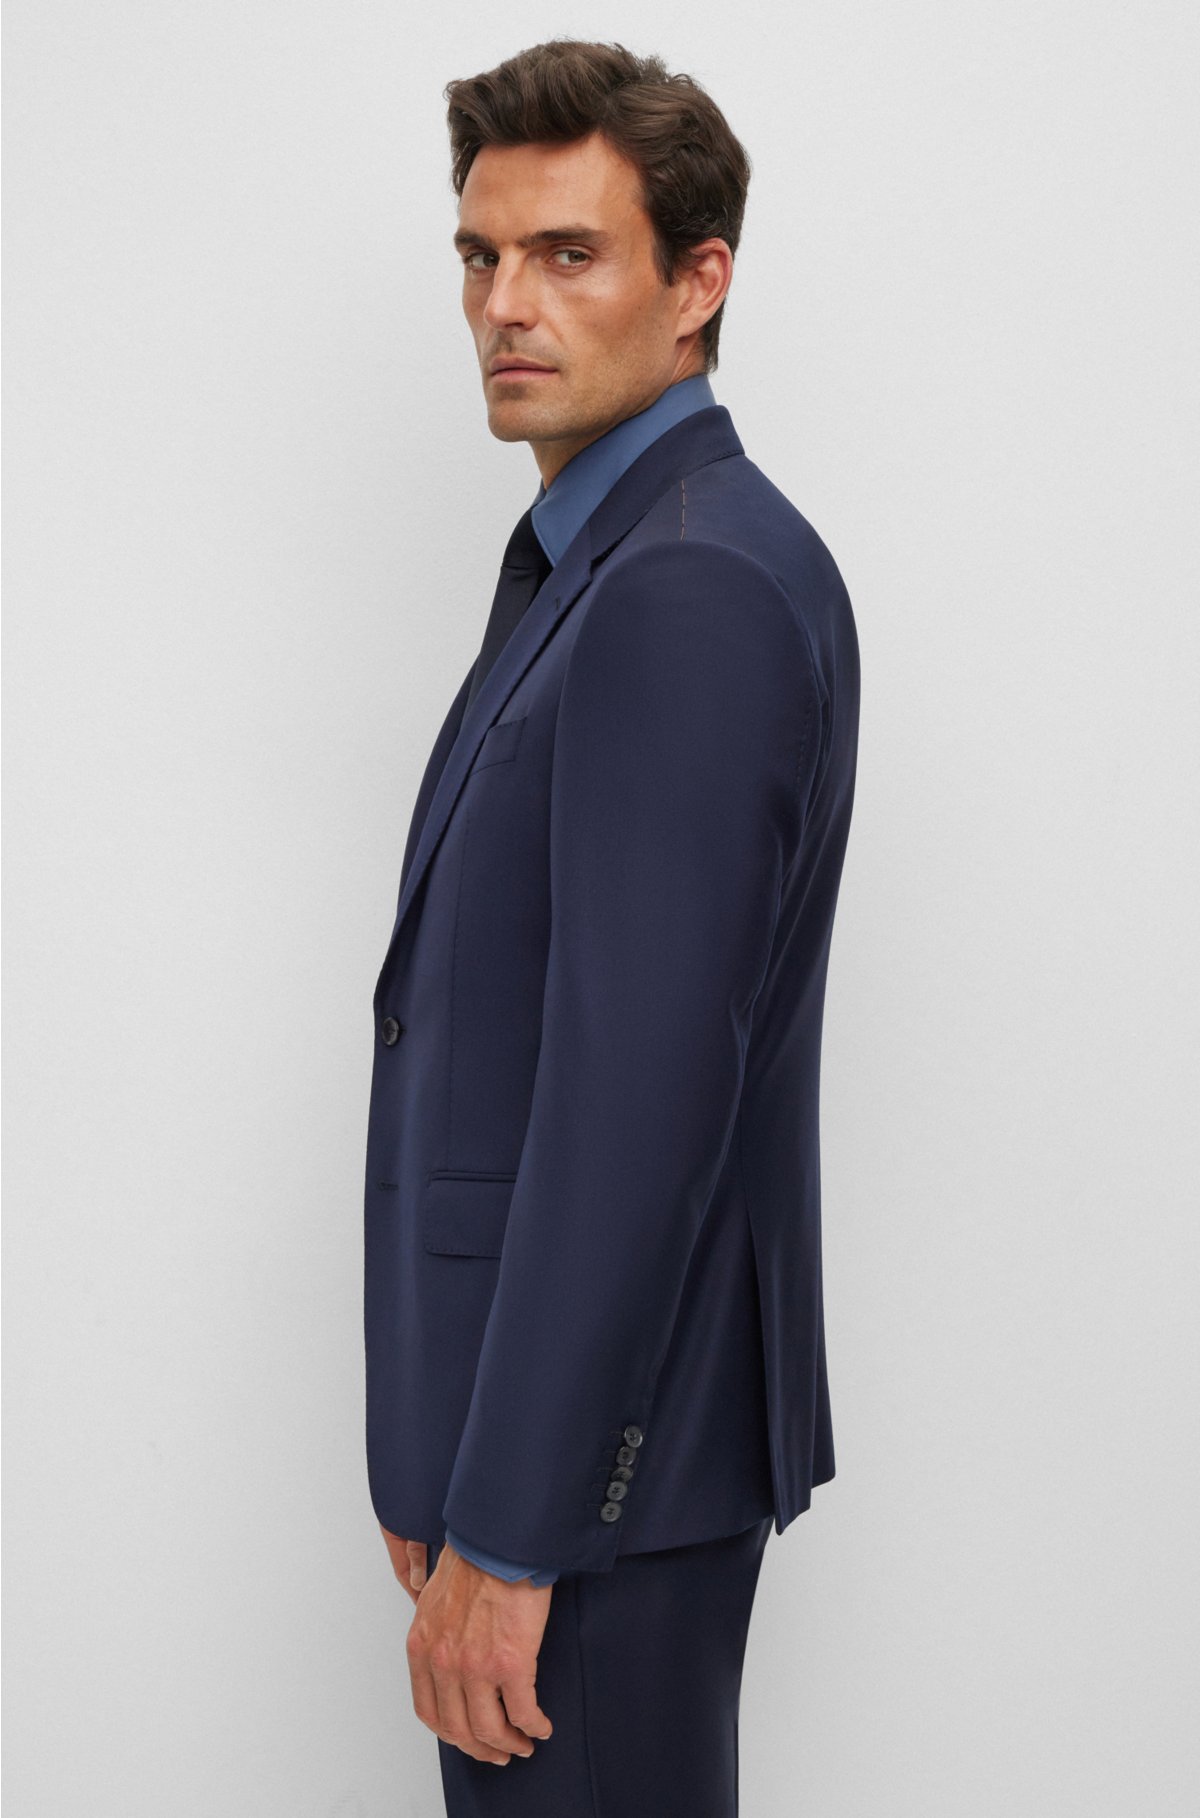 Single-breasted jacket in stretch wool, Dark Blue